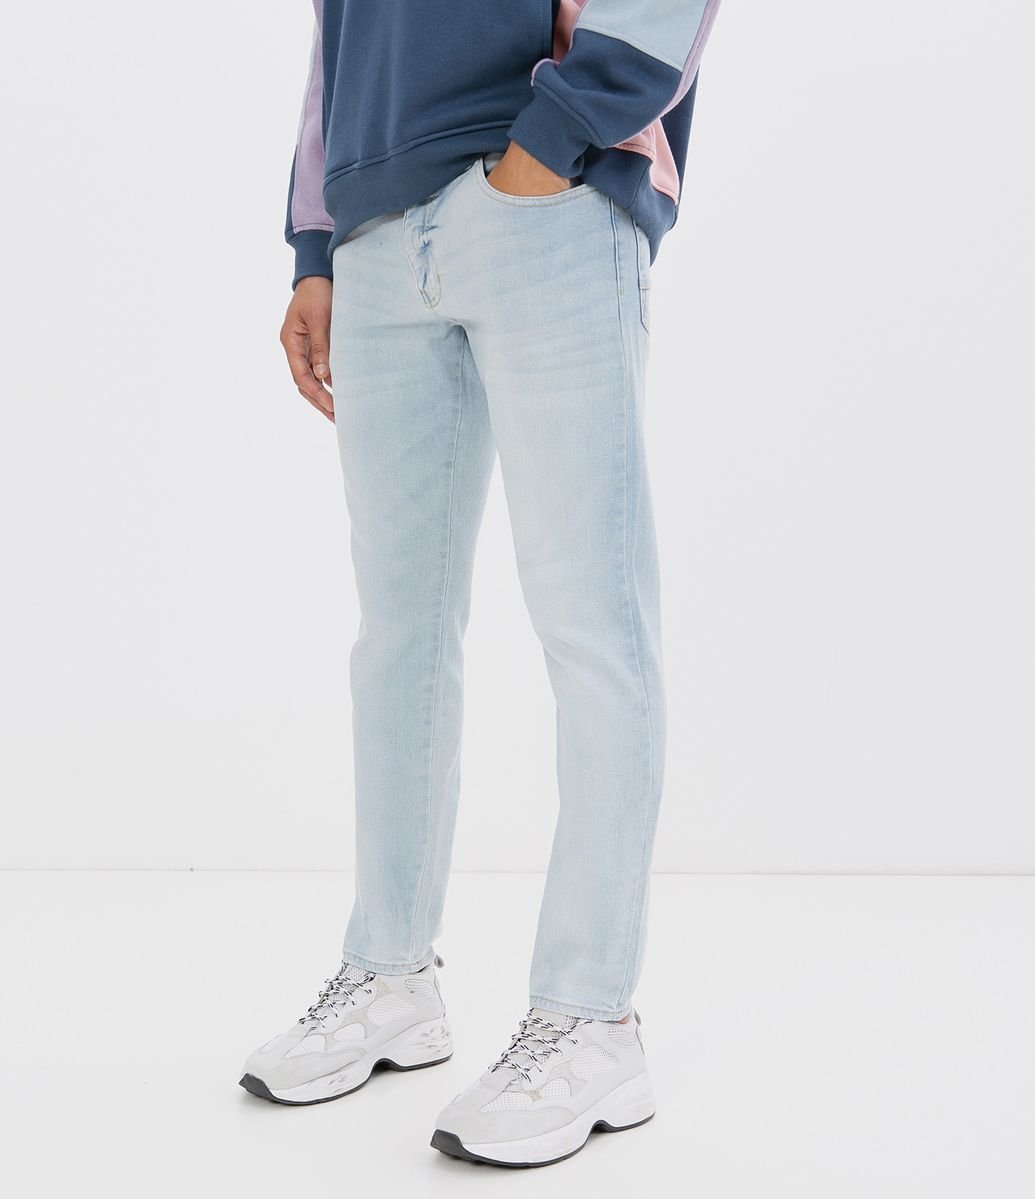 calças jeans renner feminina